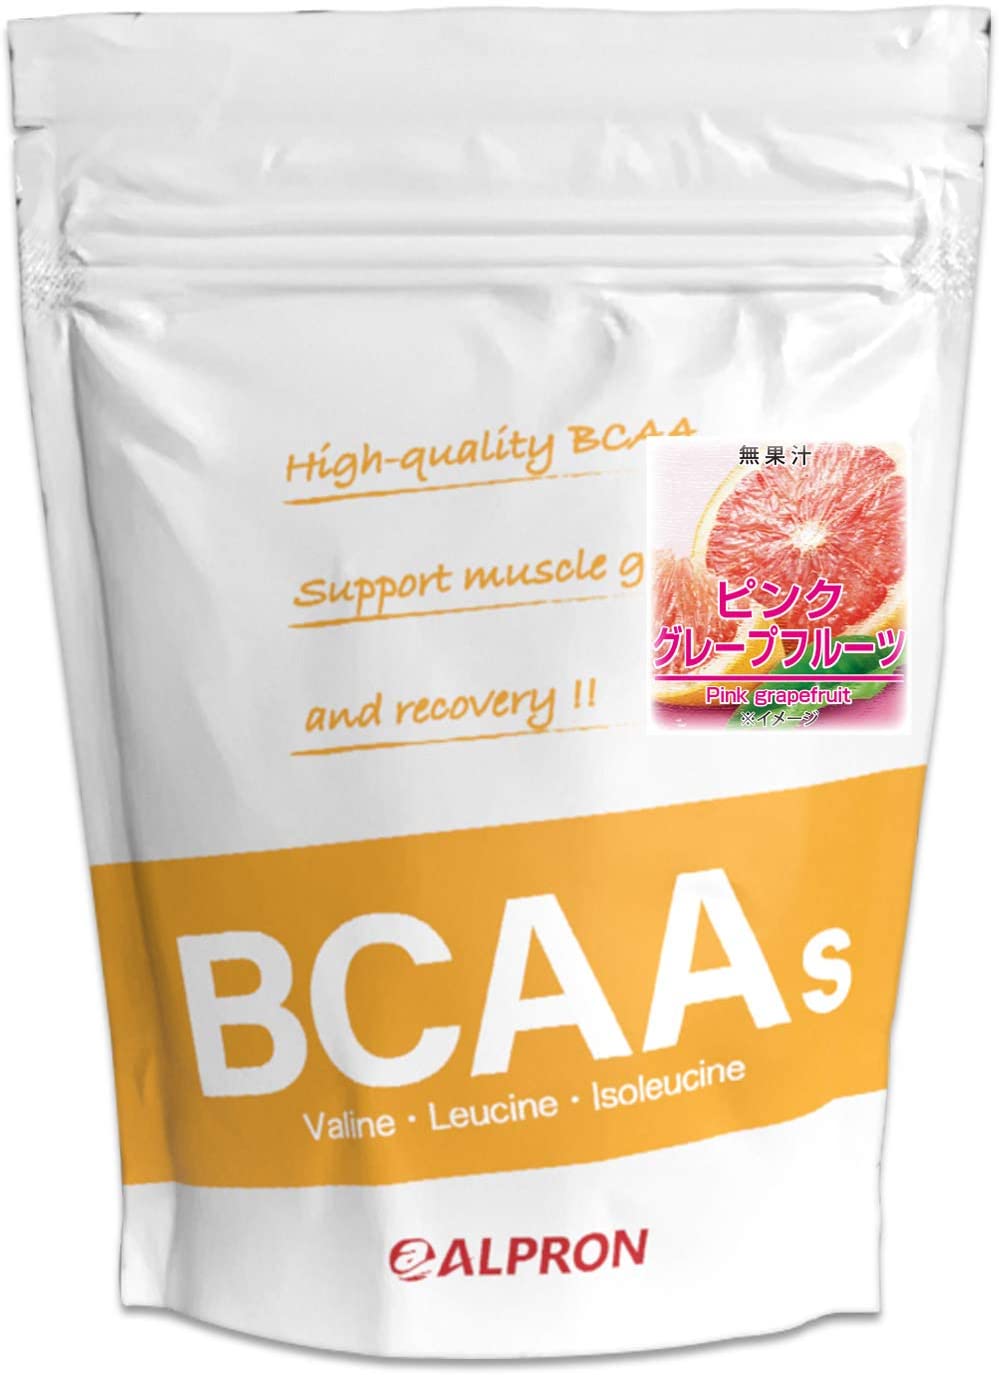 BCAA ピンクグレープフルーツ風味